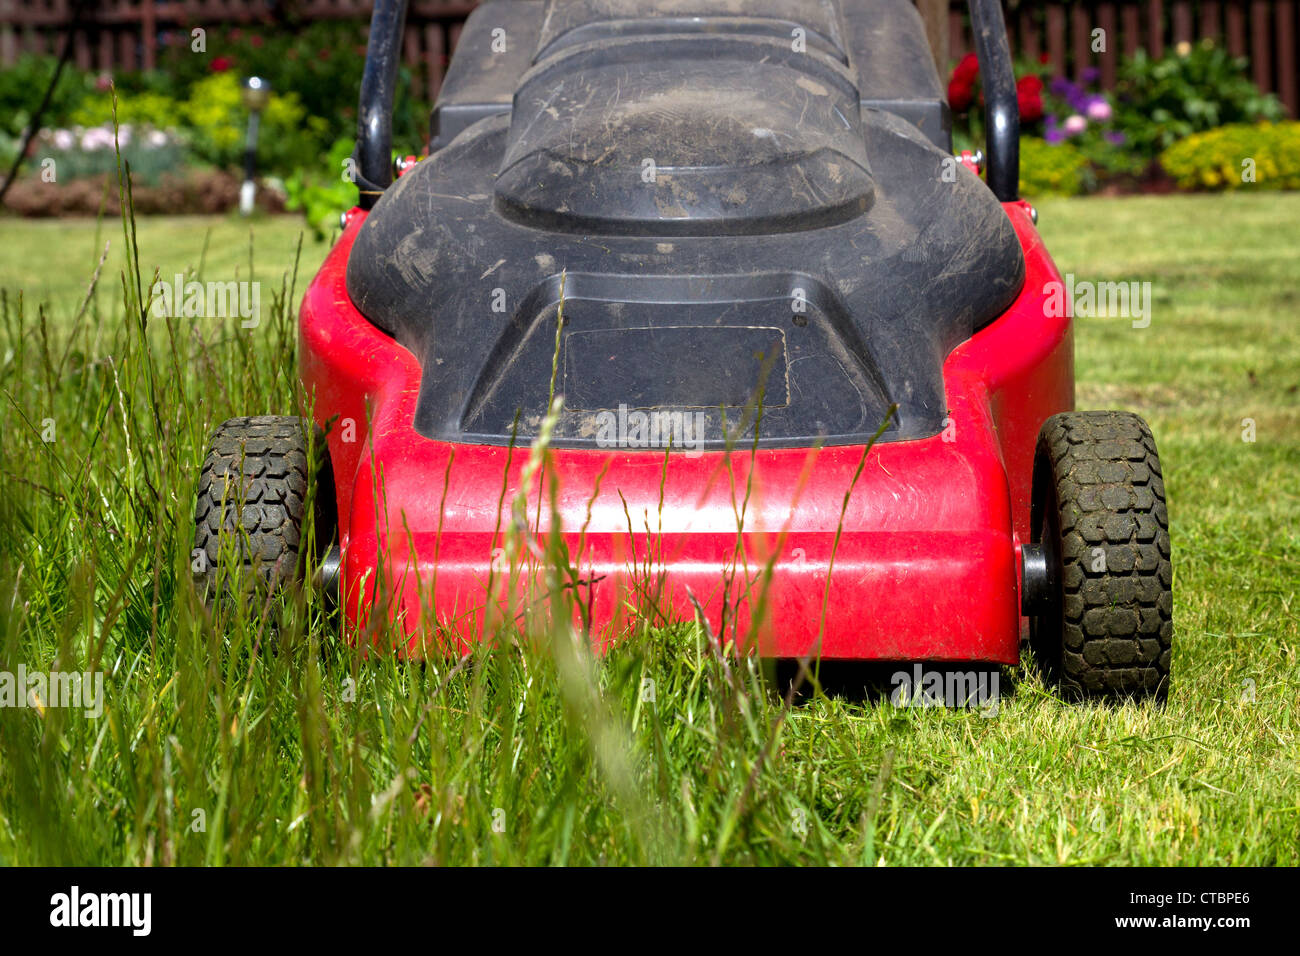 Lawnmower in a home flower garden Stock Photo